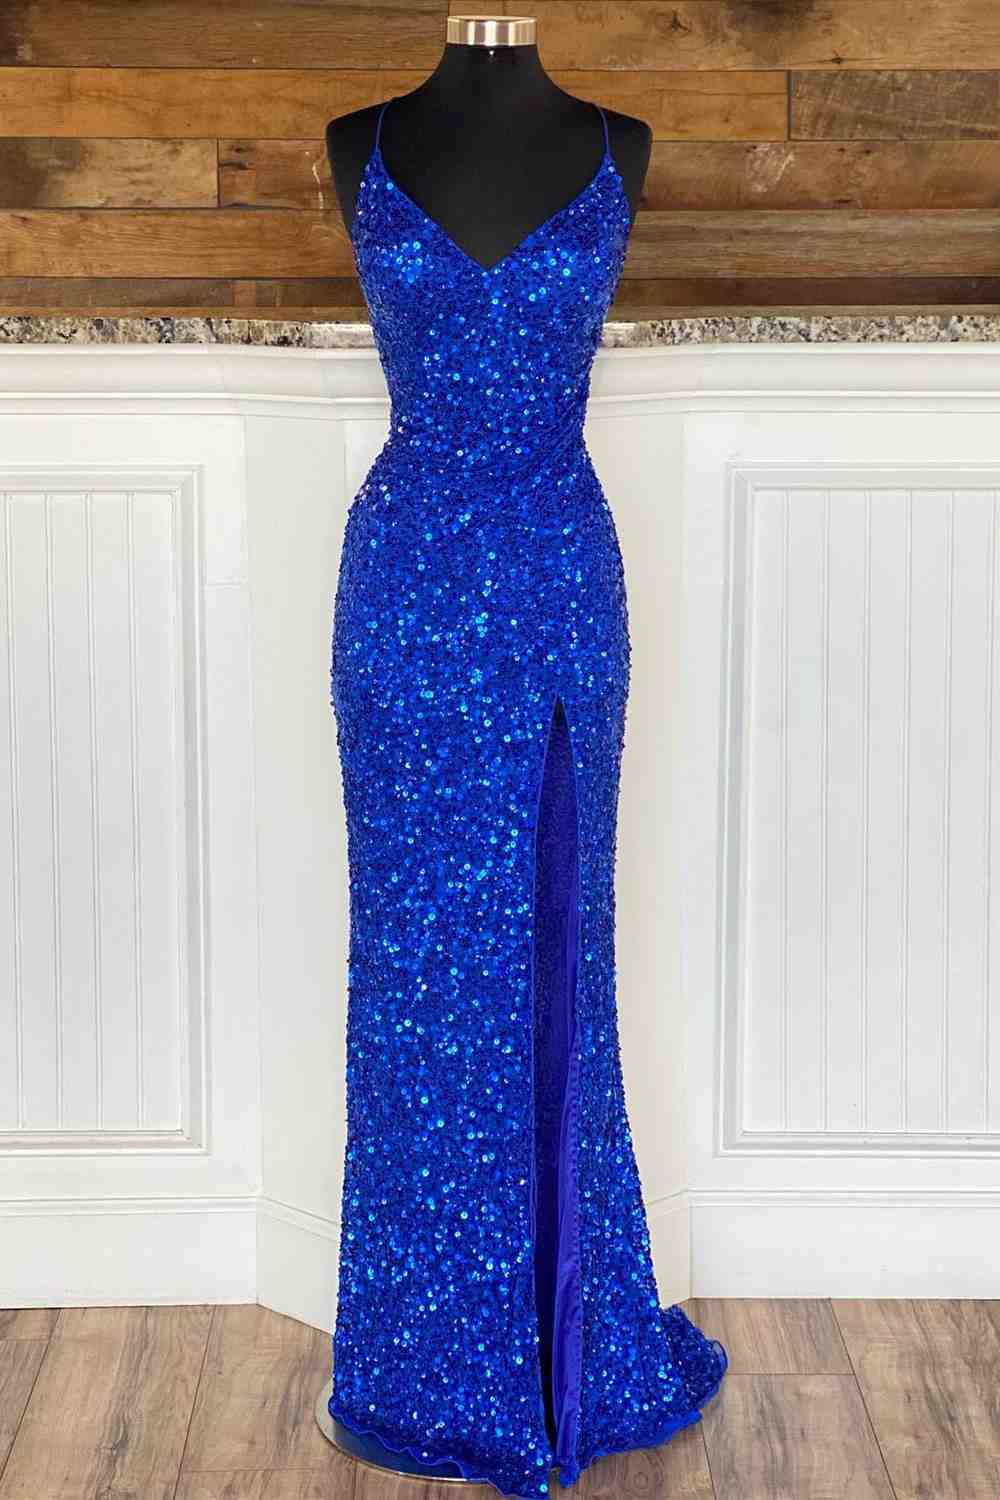 Lace-Up High Slit Royal Blue Glitters Long Party Dress